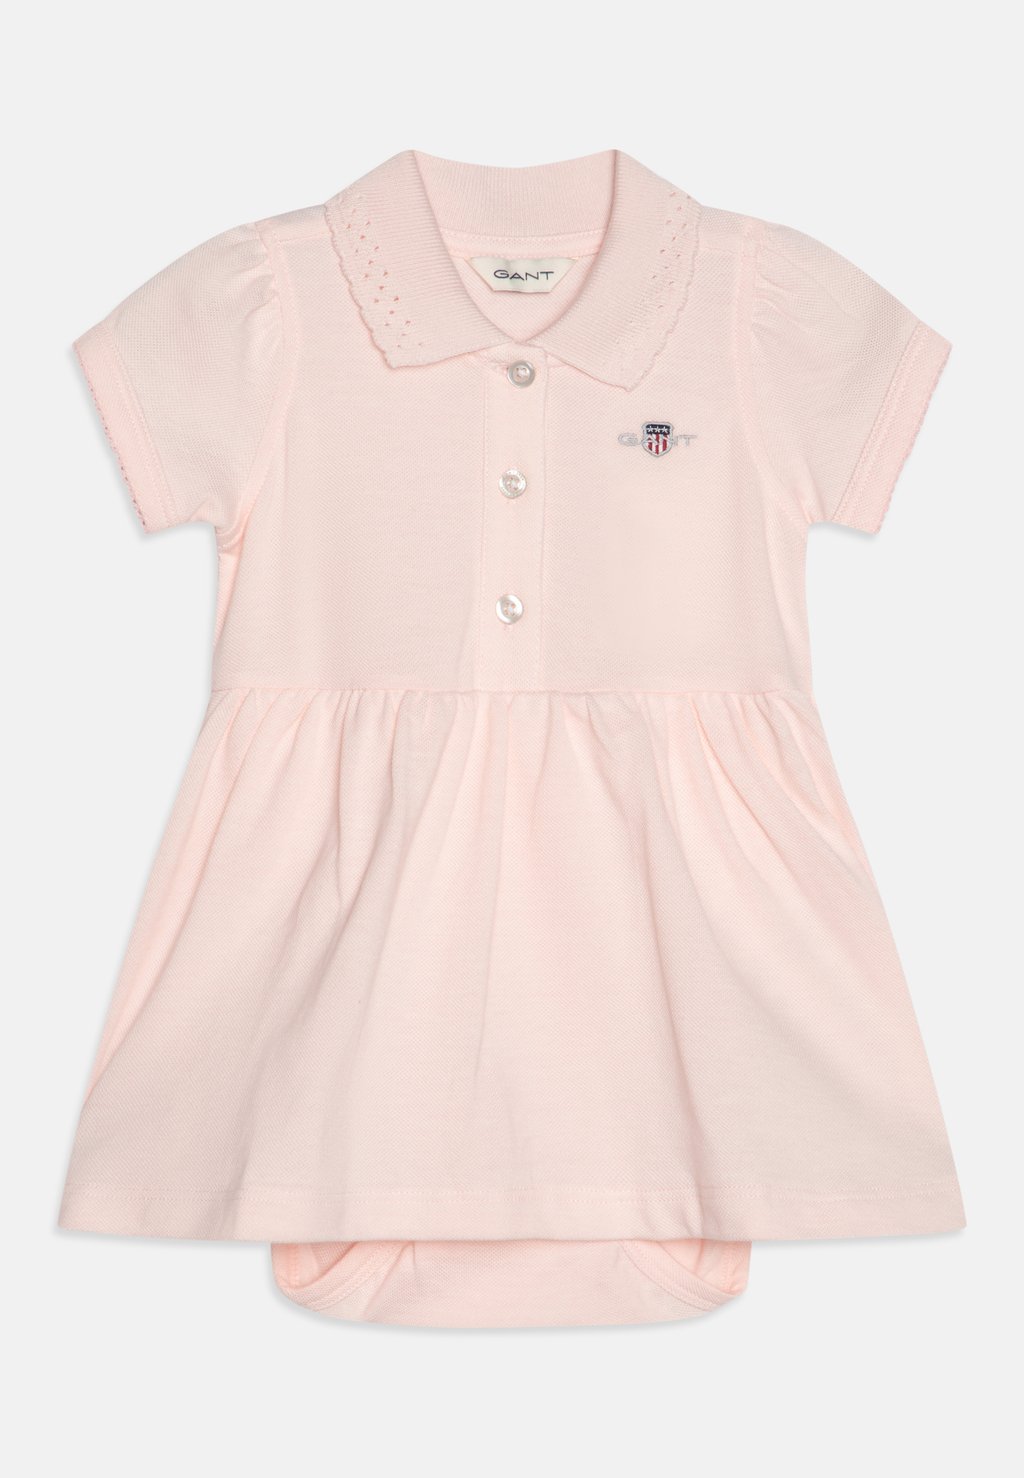 Дневное платье BABY RUGGER DRESS GANT, цвет crystal pink